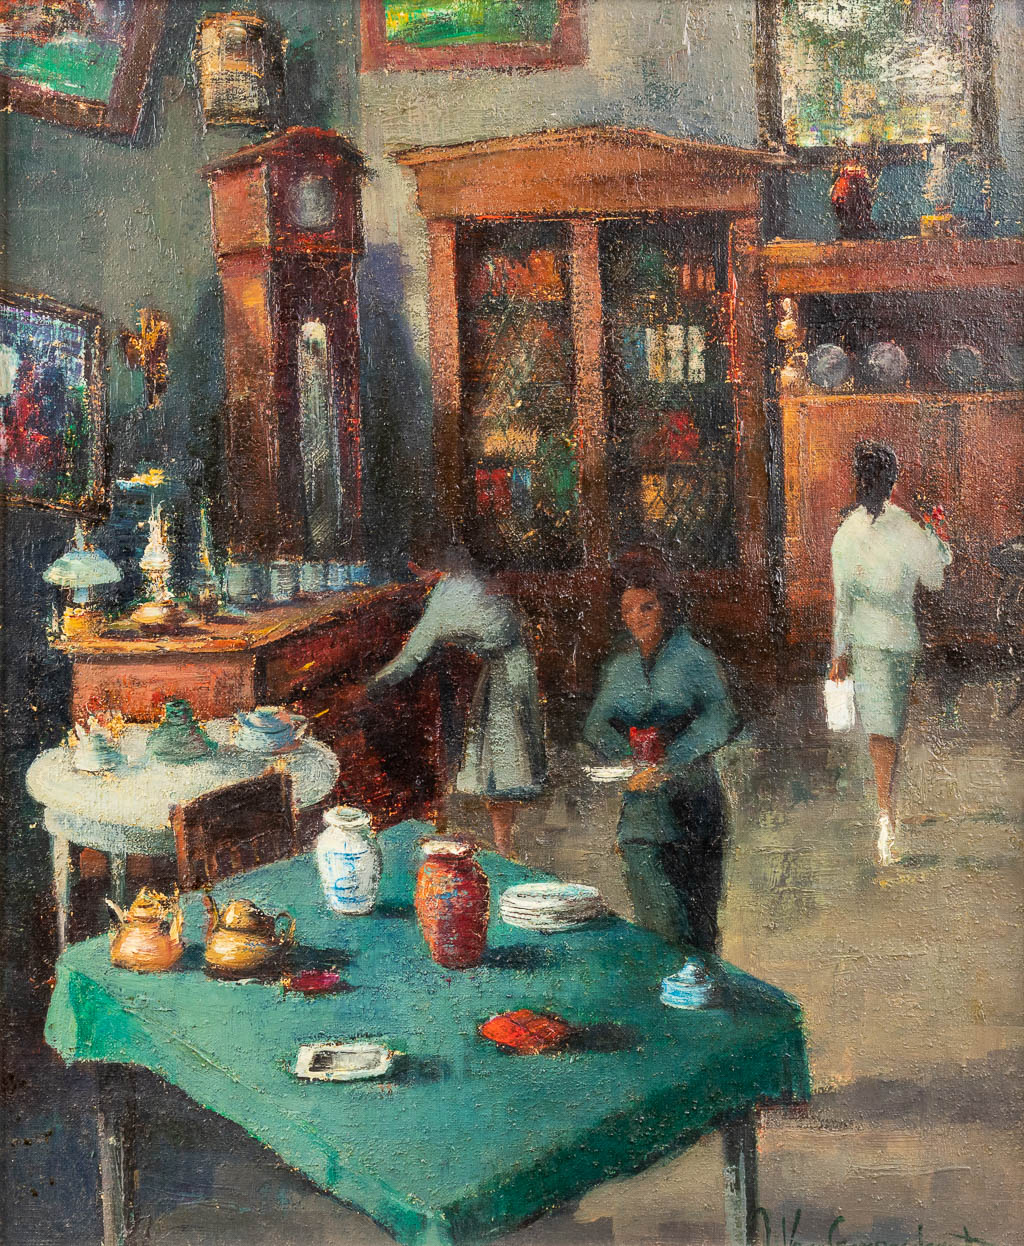 Jan VAN CAMPENHOUT (1907-1972) 'Interior with figurines' oil on canvas. (W: 50 x H: 60 cm)